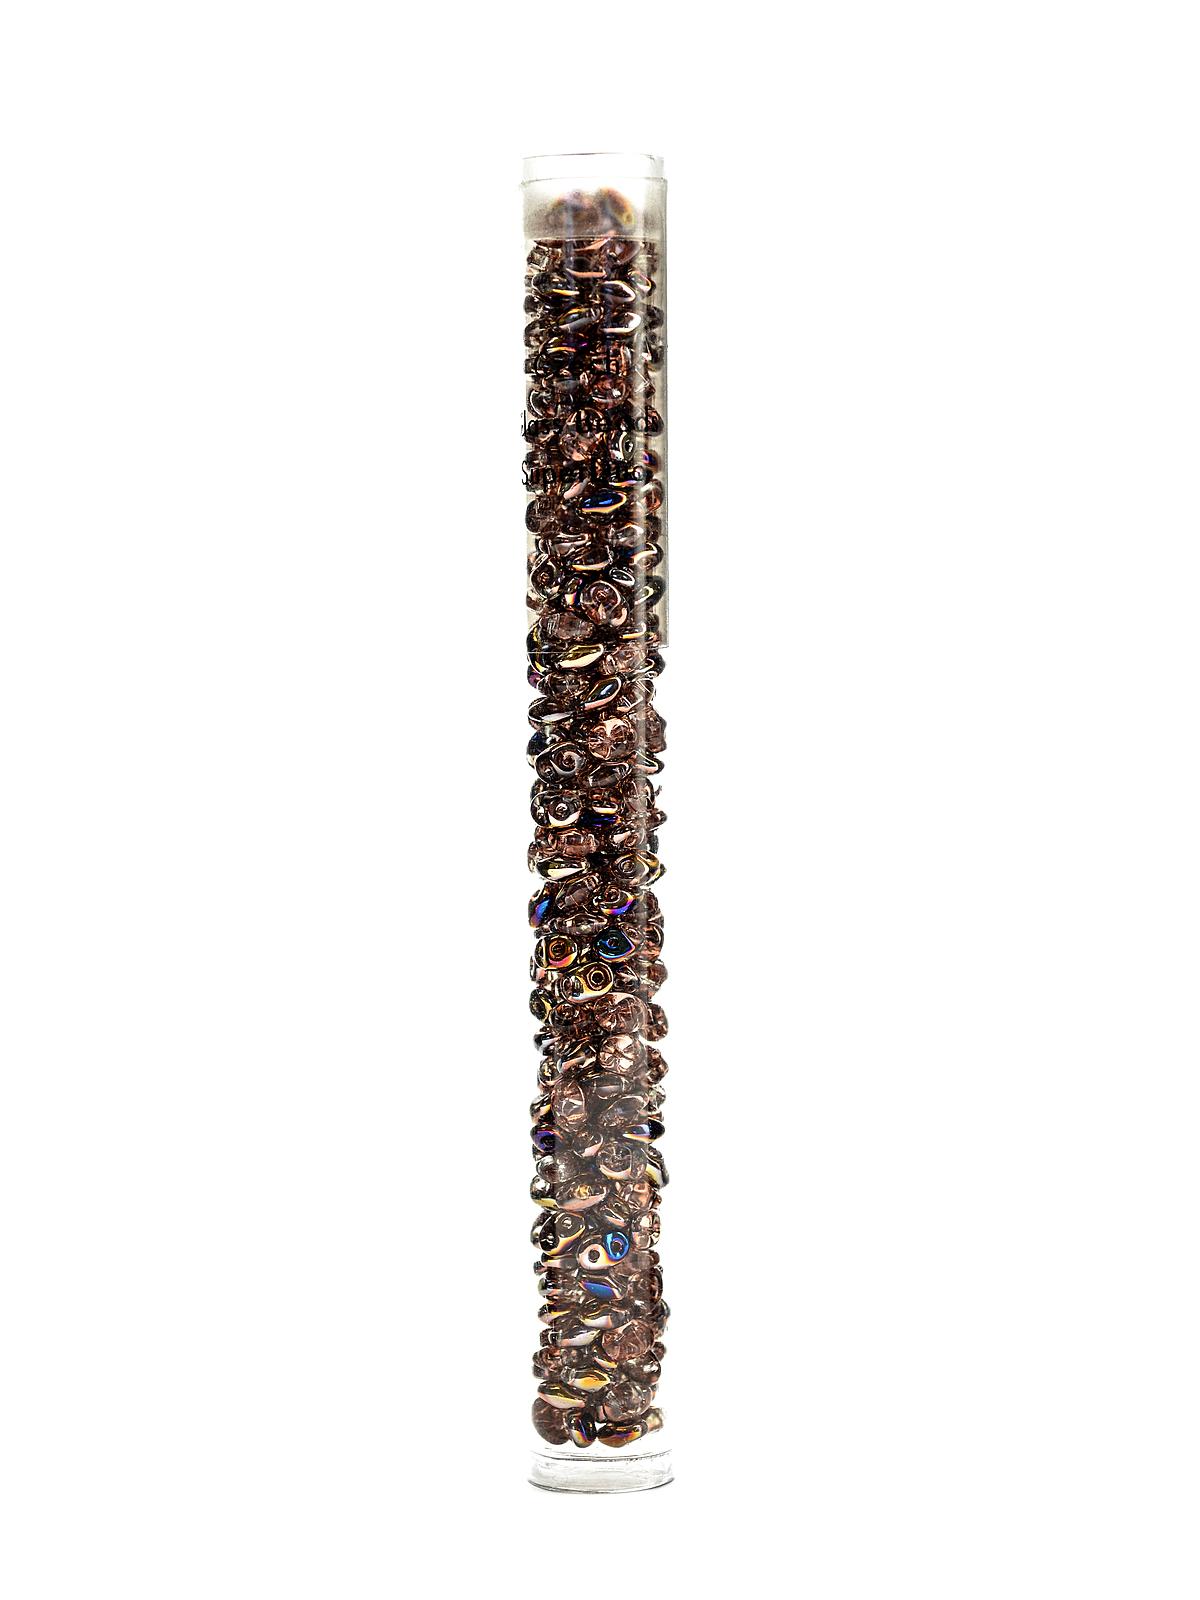 Super Duo Beads Crystal Sliperit 2.5 Mm X 5 Mm 24 Gm Tube